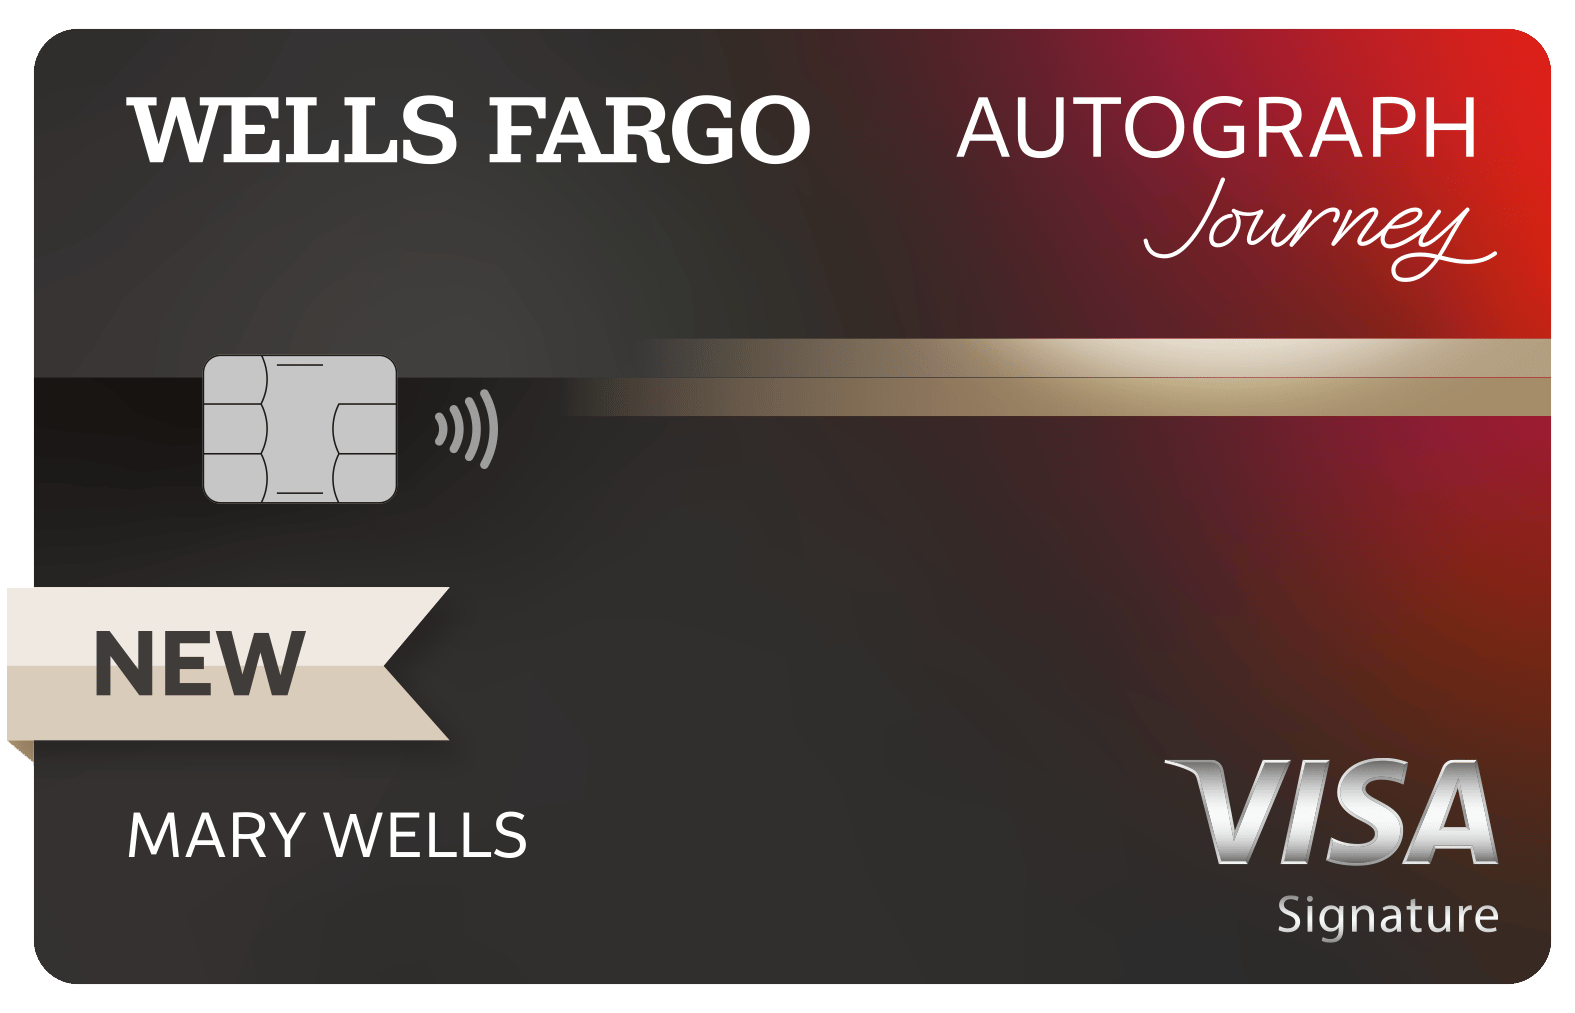 Wells Fargo Autograph Journey℠ Card Image